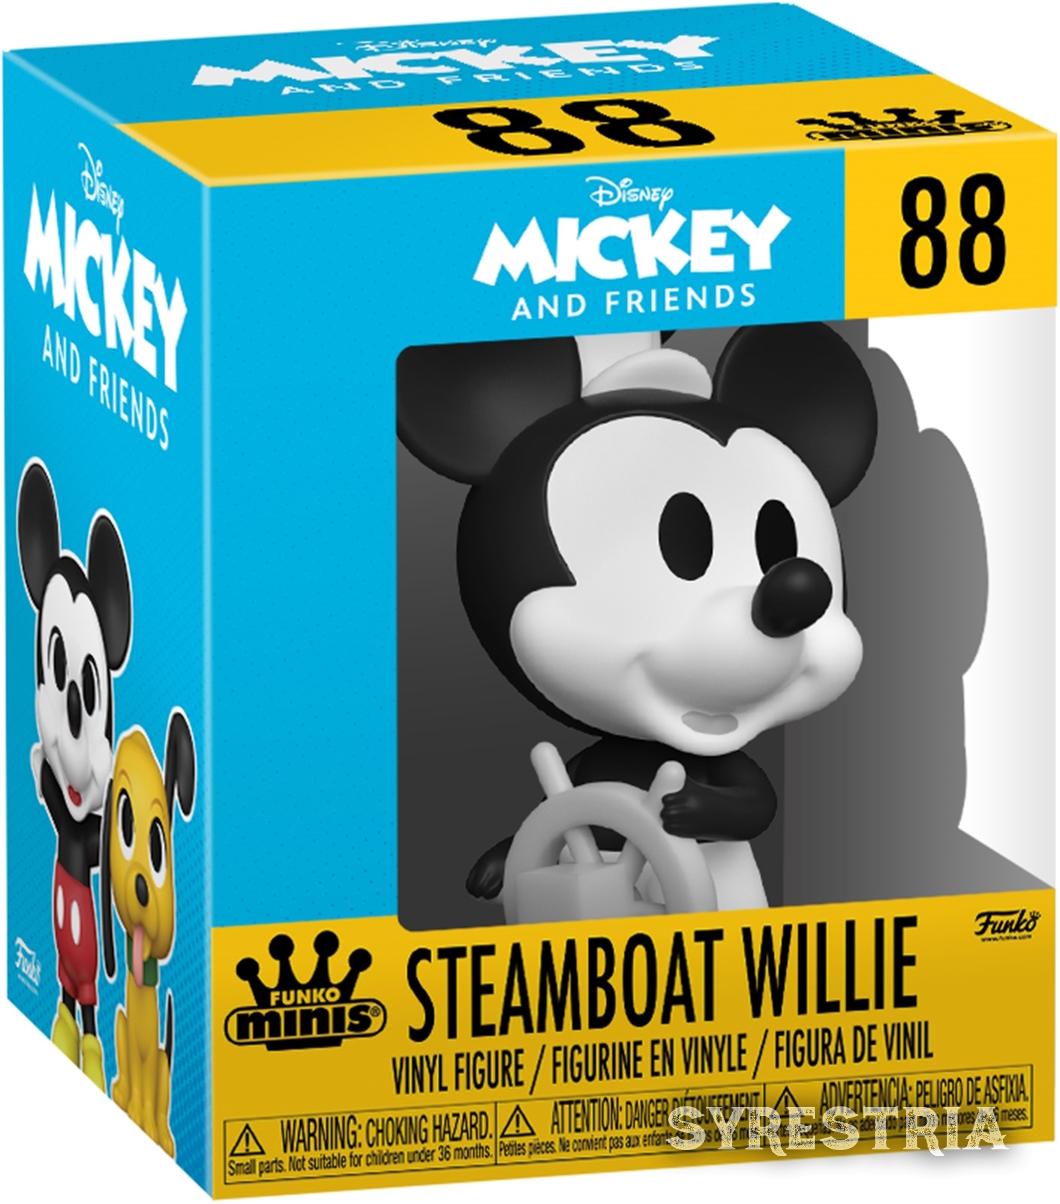 Disney Mickey and Frinds - Steamboat Willie 88 - Funko Minis Vynl Figuren